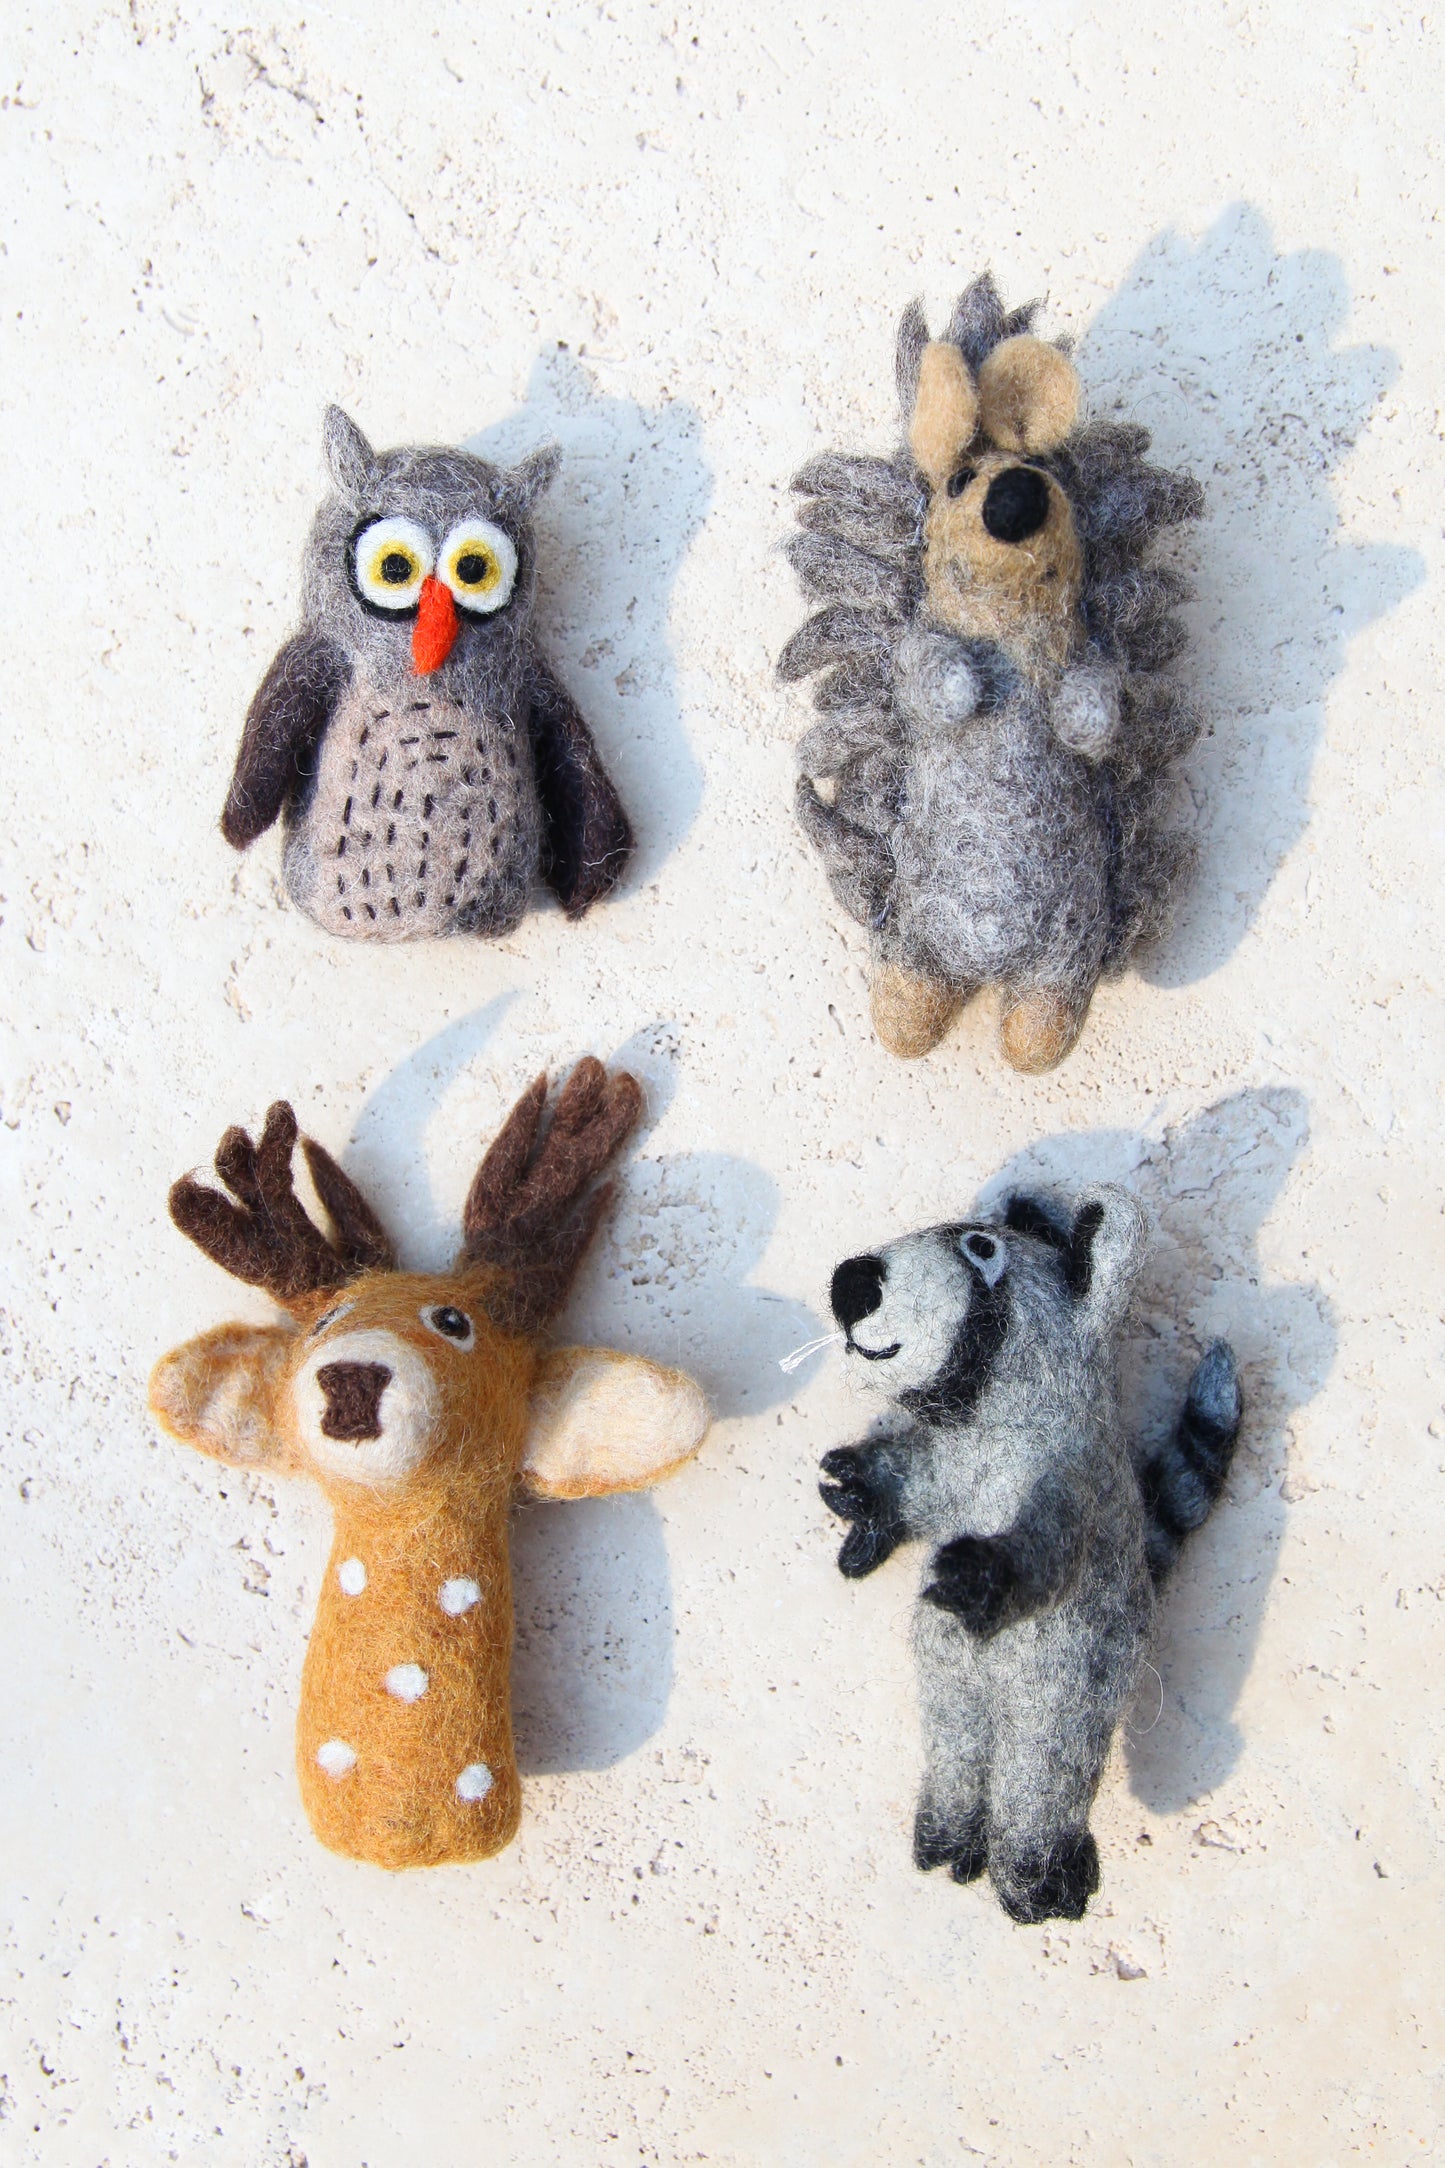 Estella Crocheted Animal Finger Puppets